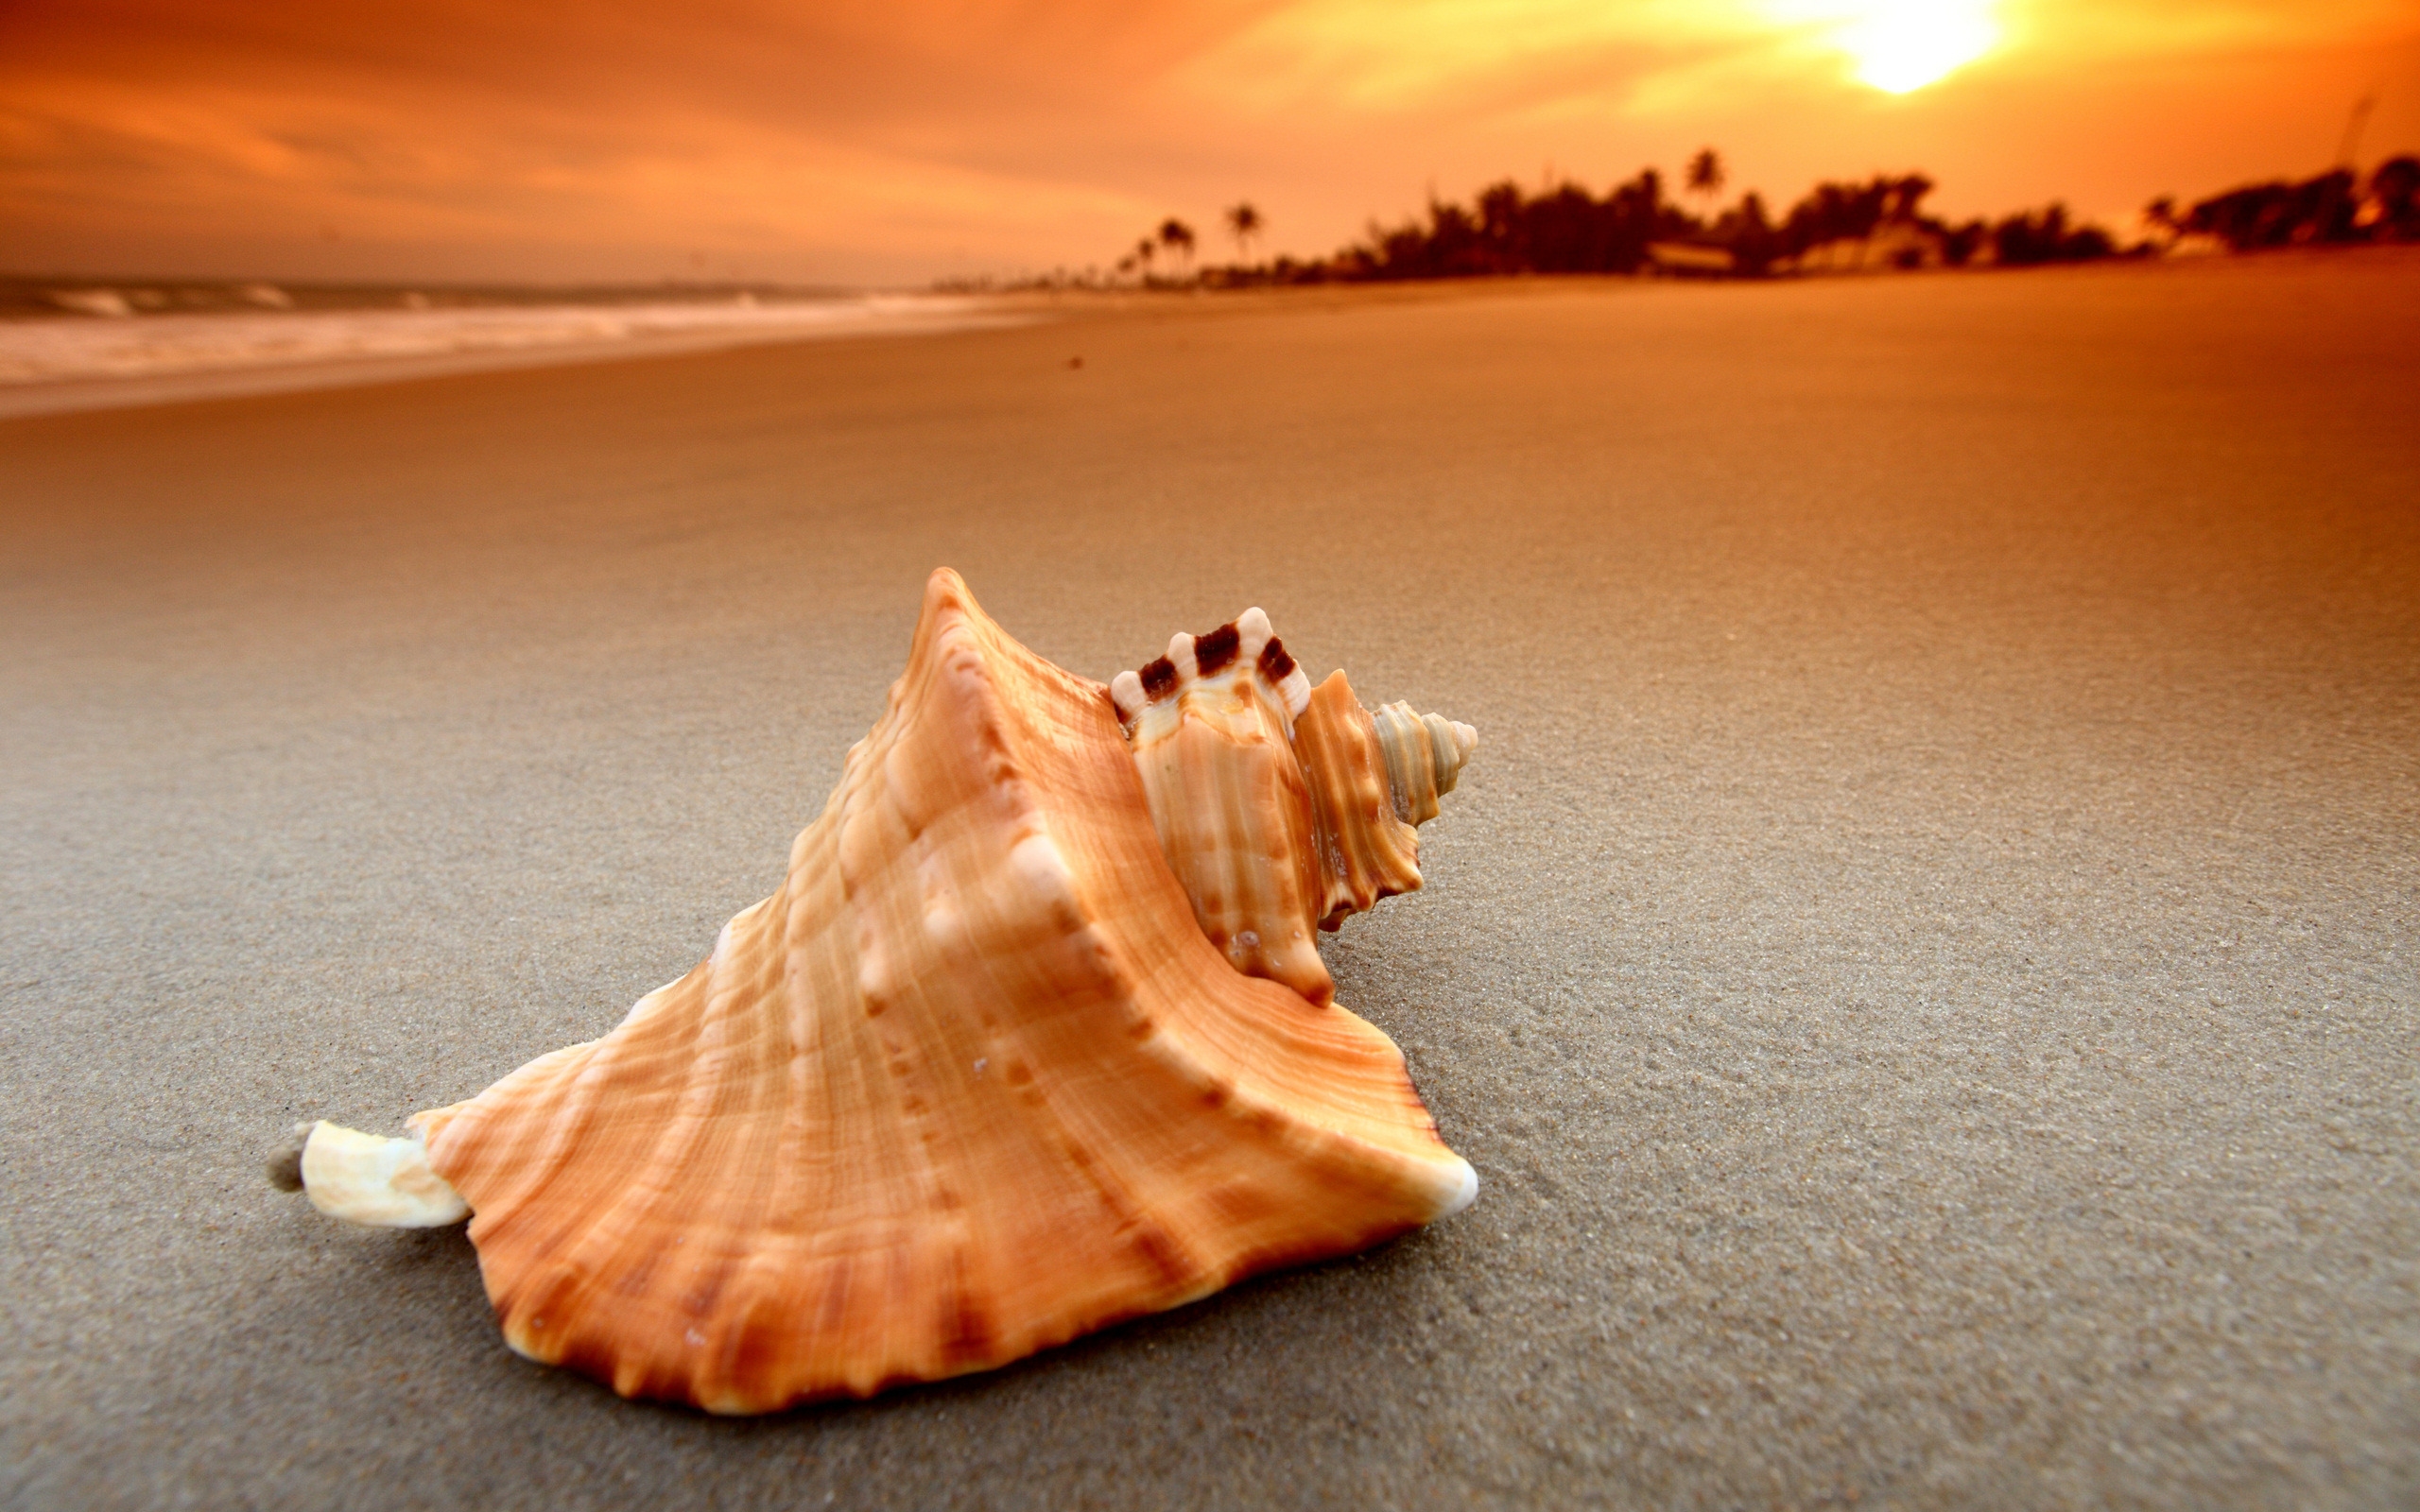 Ракушка на песчаном пляжу на закате